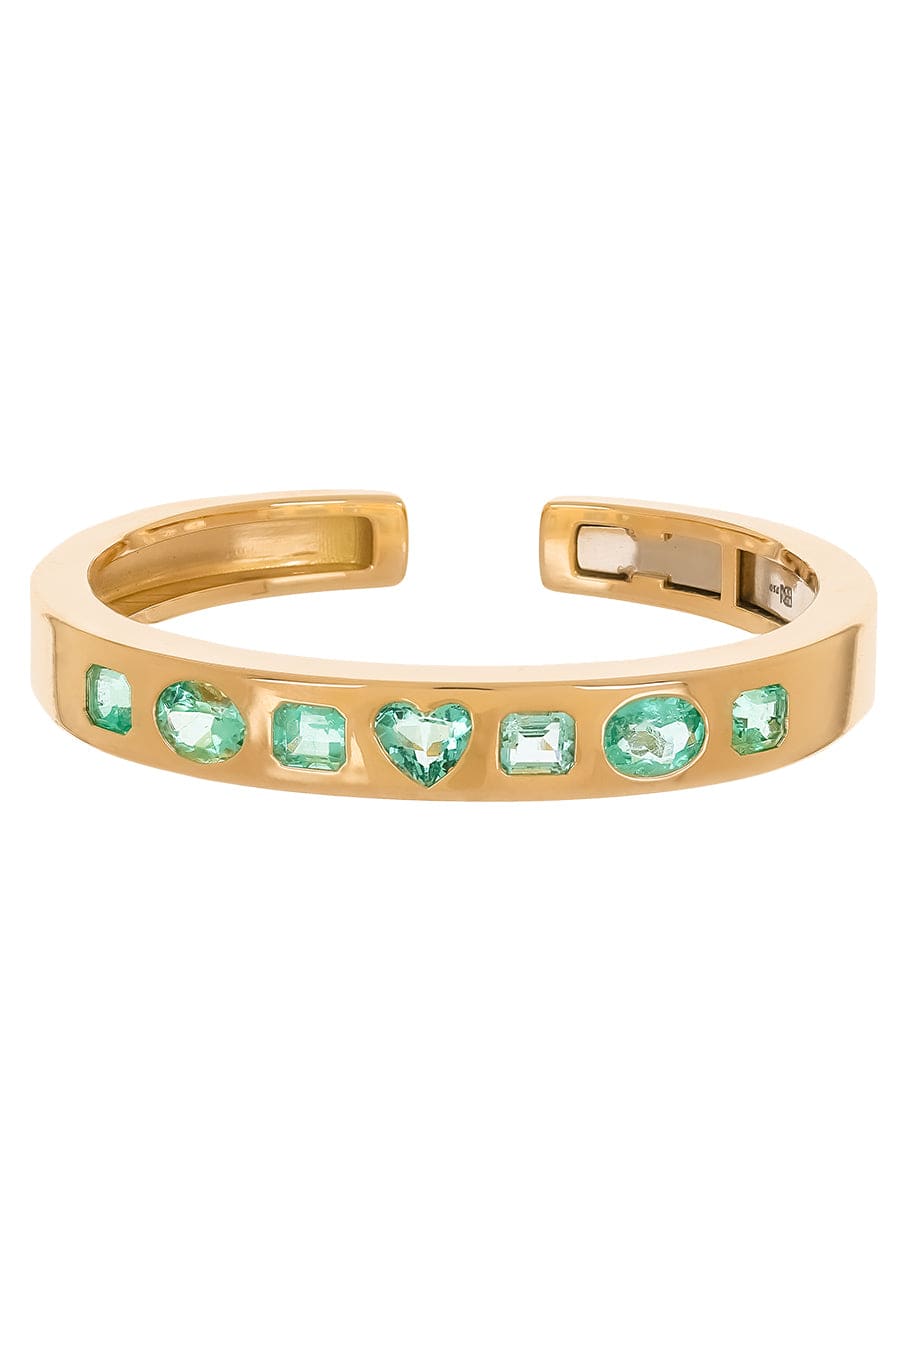 BRENT NEALE-Emerald Gypsy Cuff-YELLOW GOLD